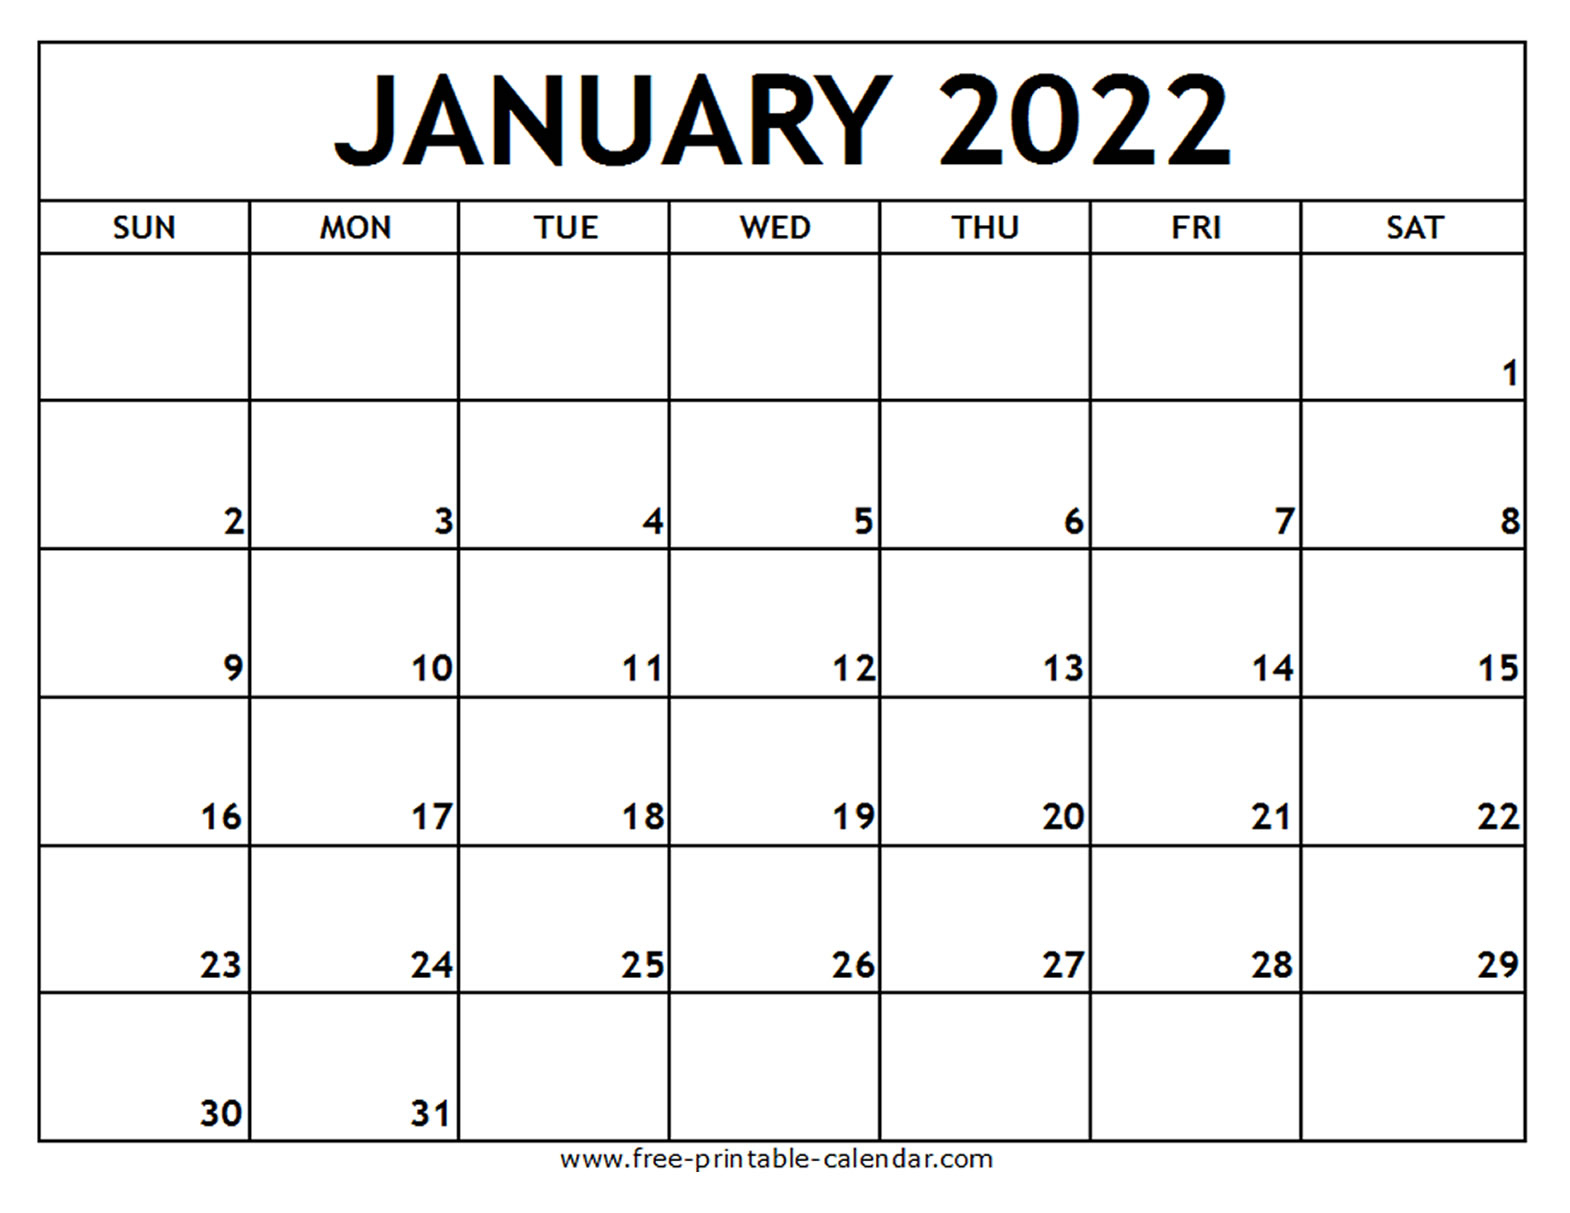 Get Calendar Options January 2022